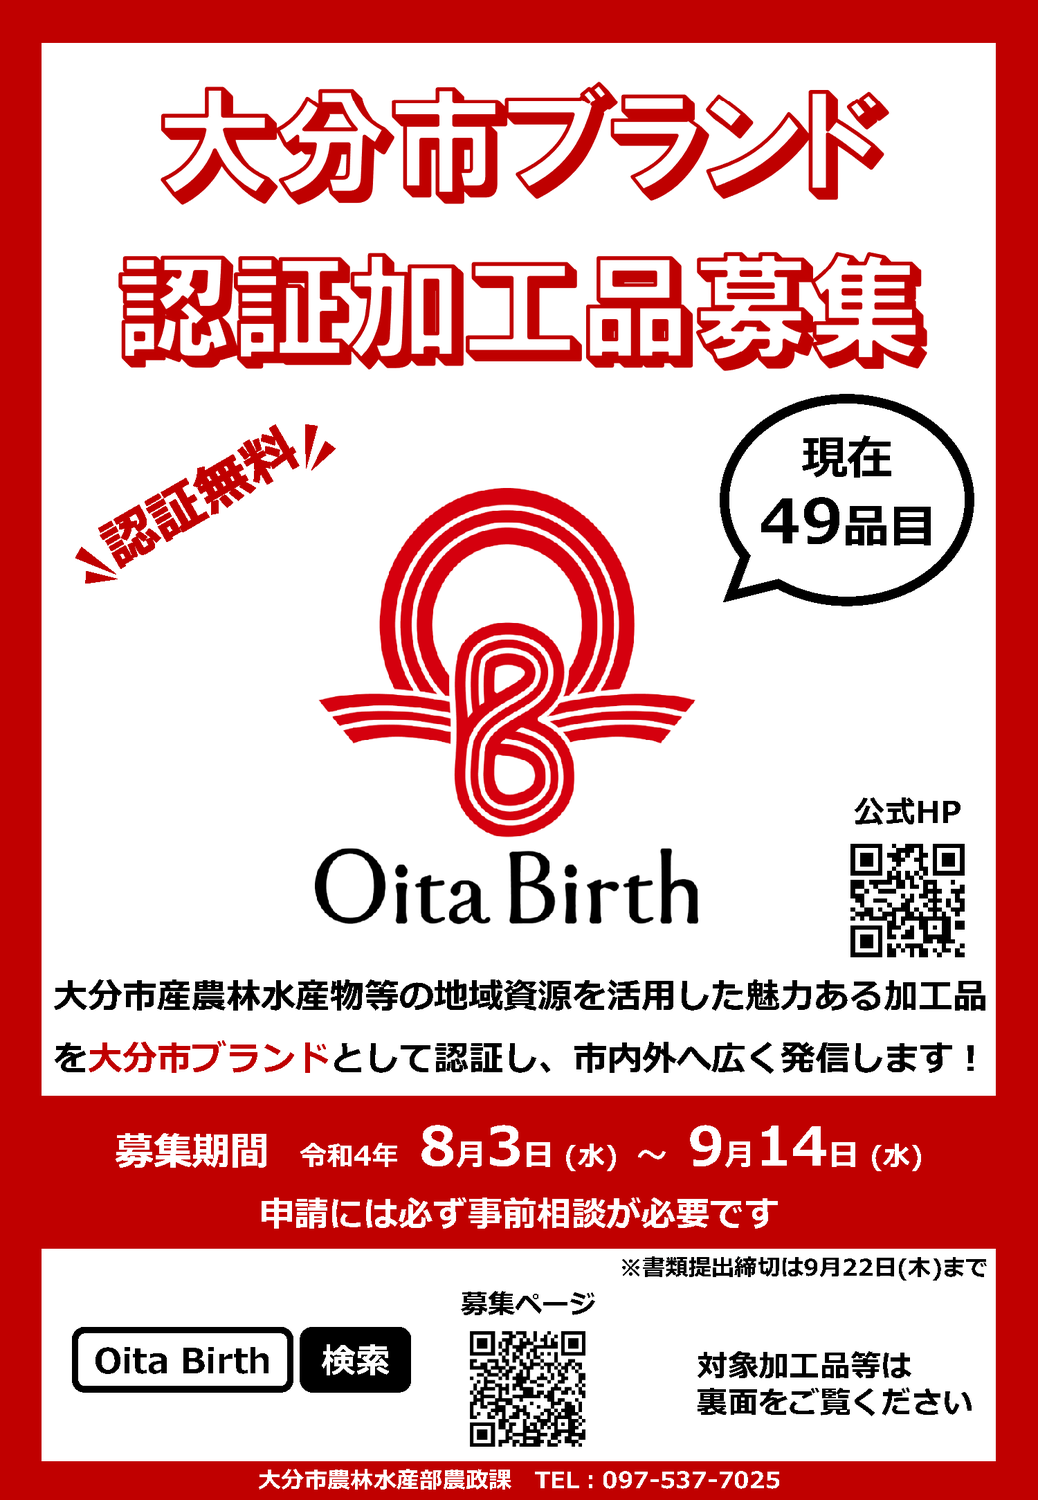 Oita Birth大分市ブランド認証加工品を募集します！のお知らせ